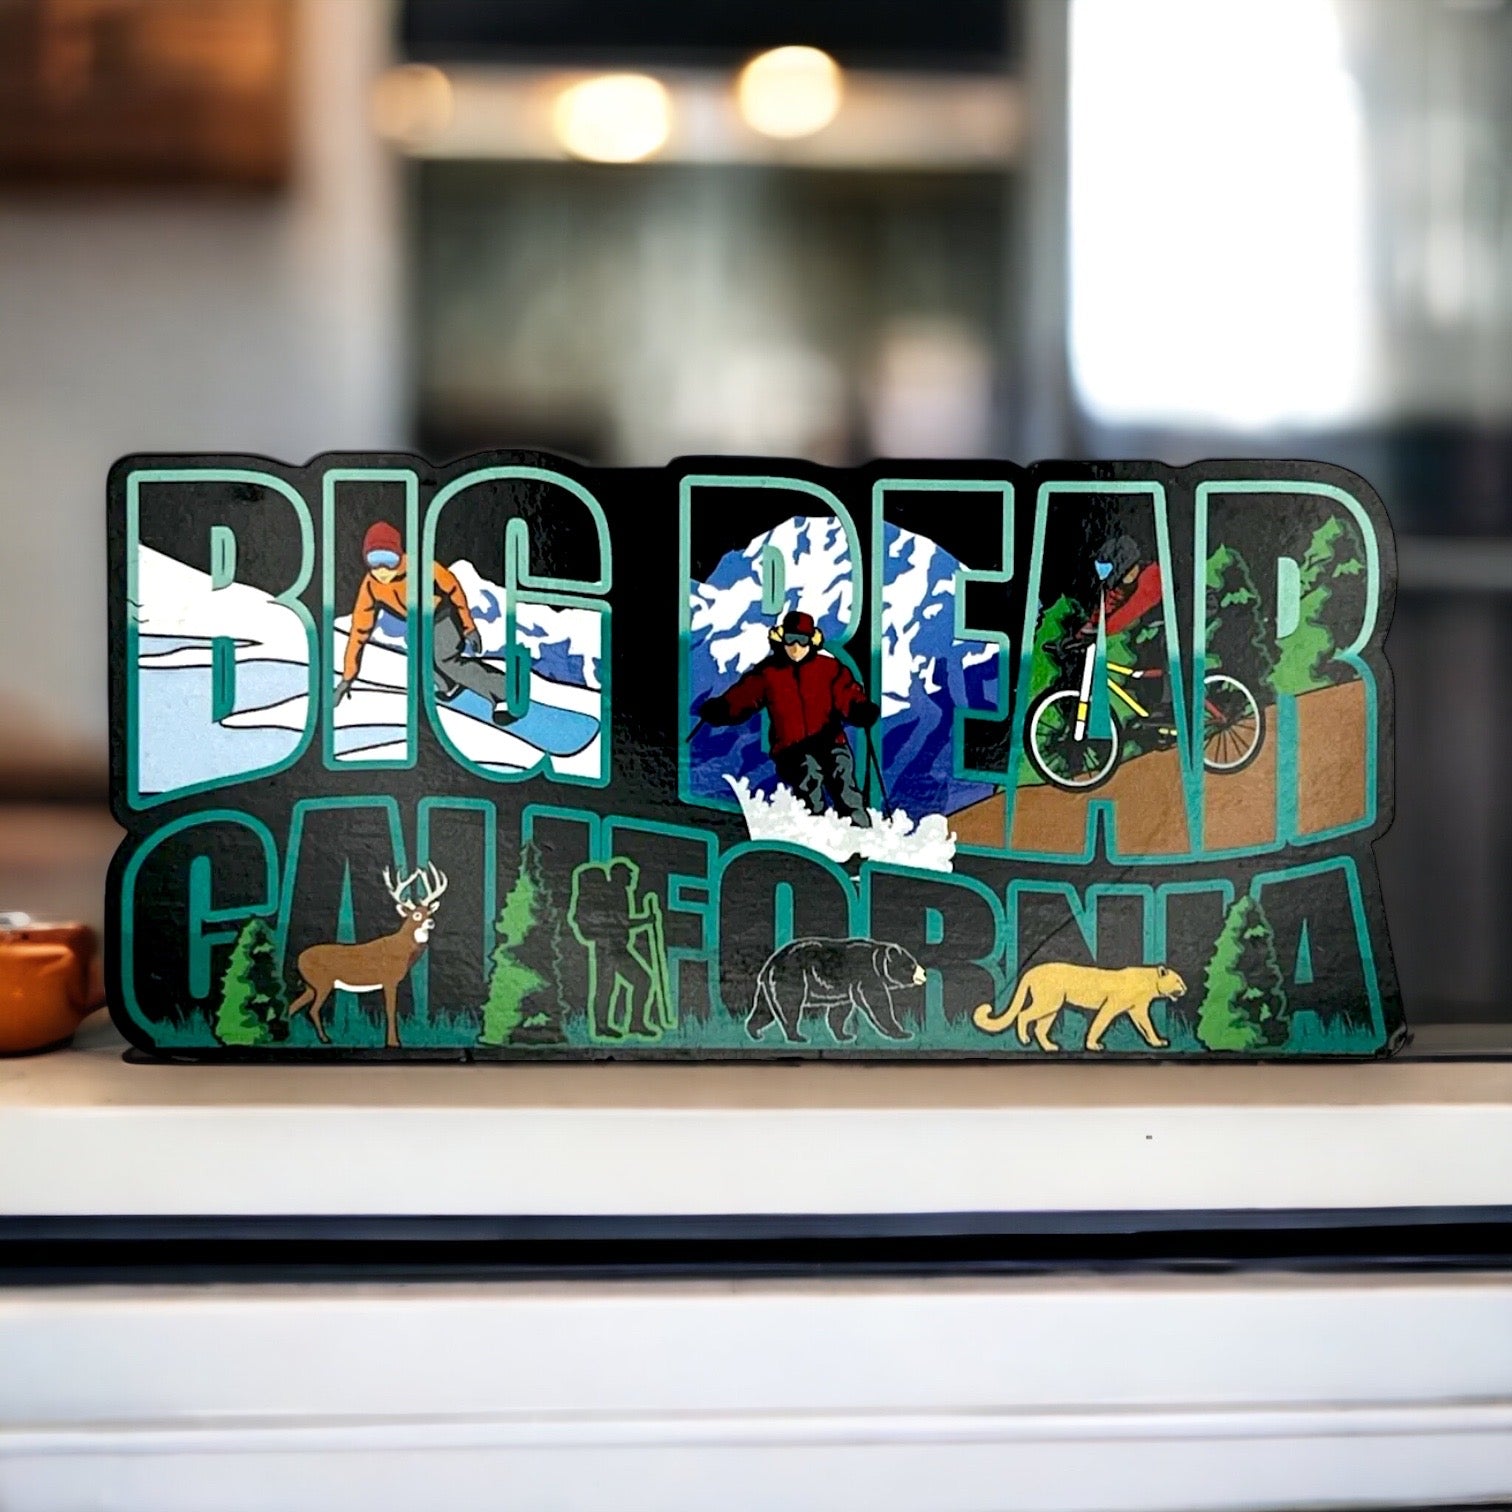 Big Bear Lake Outline Magnet, Custom Logo, Souvenir Item